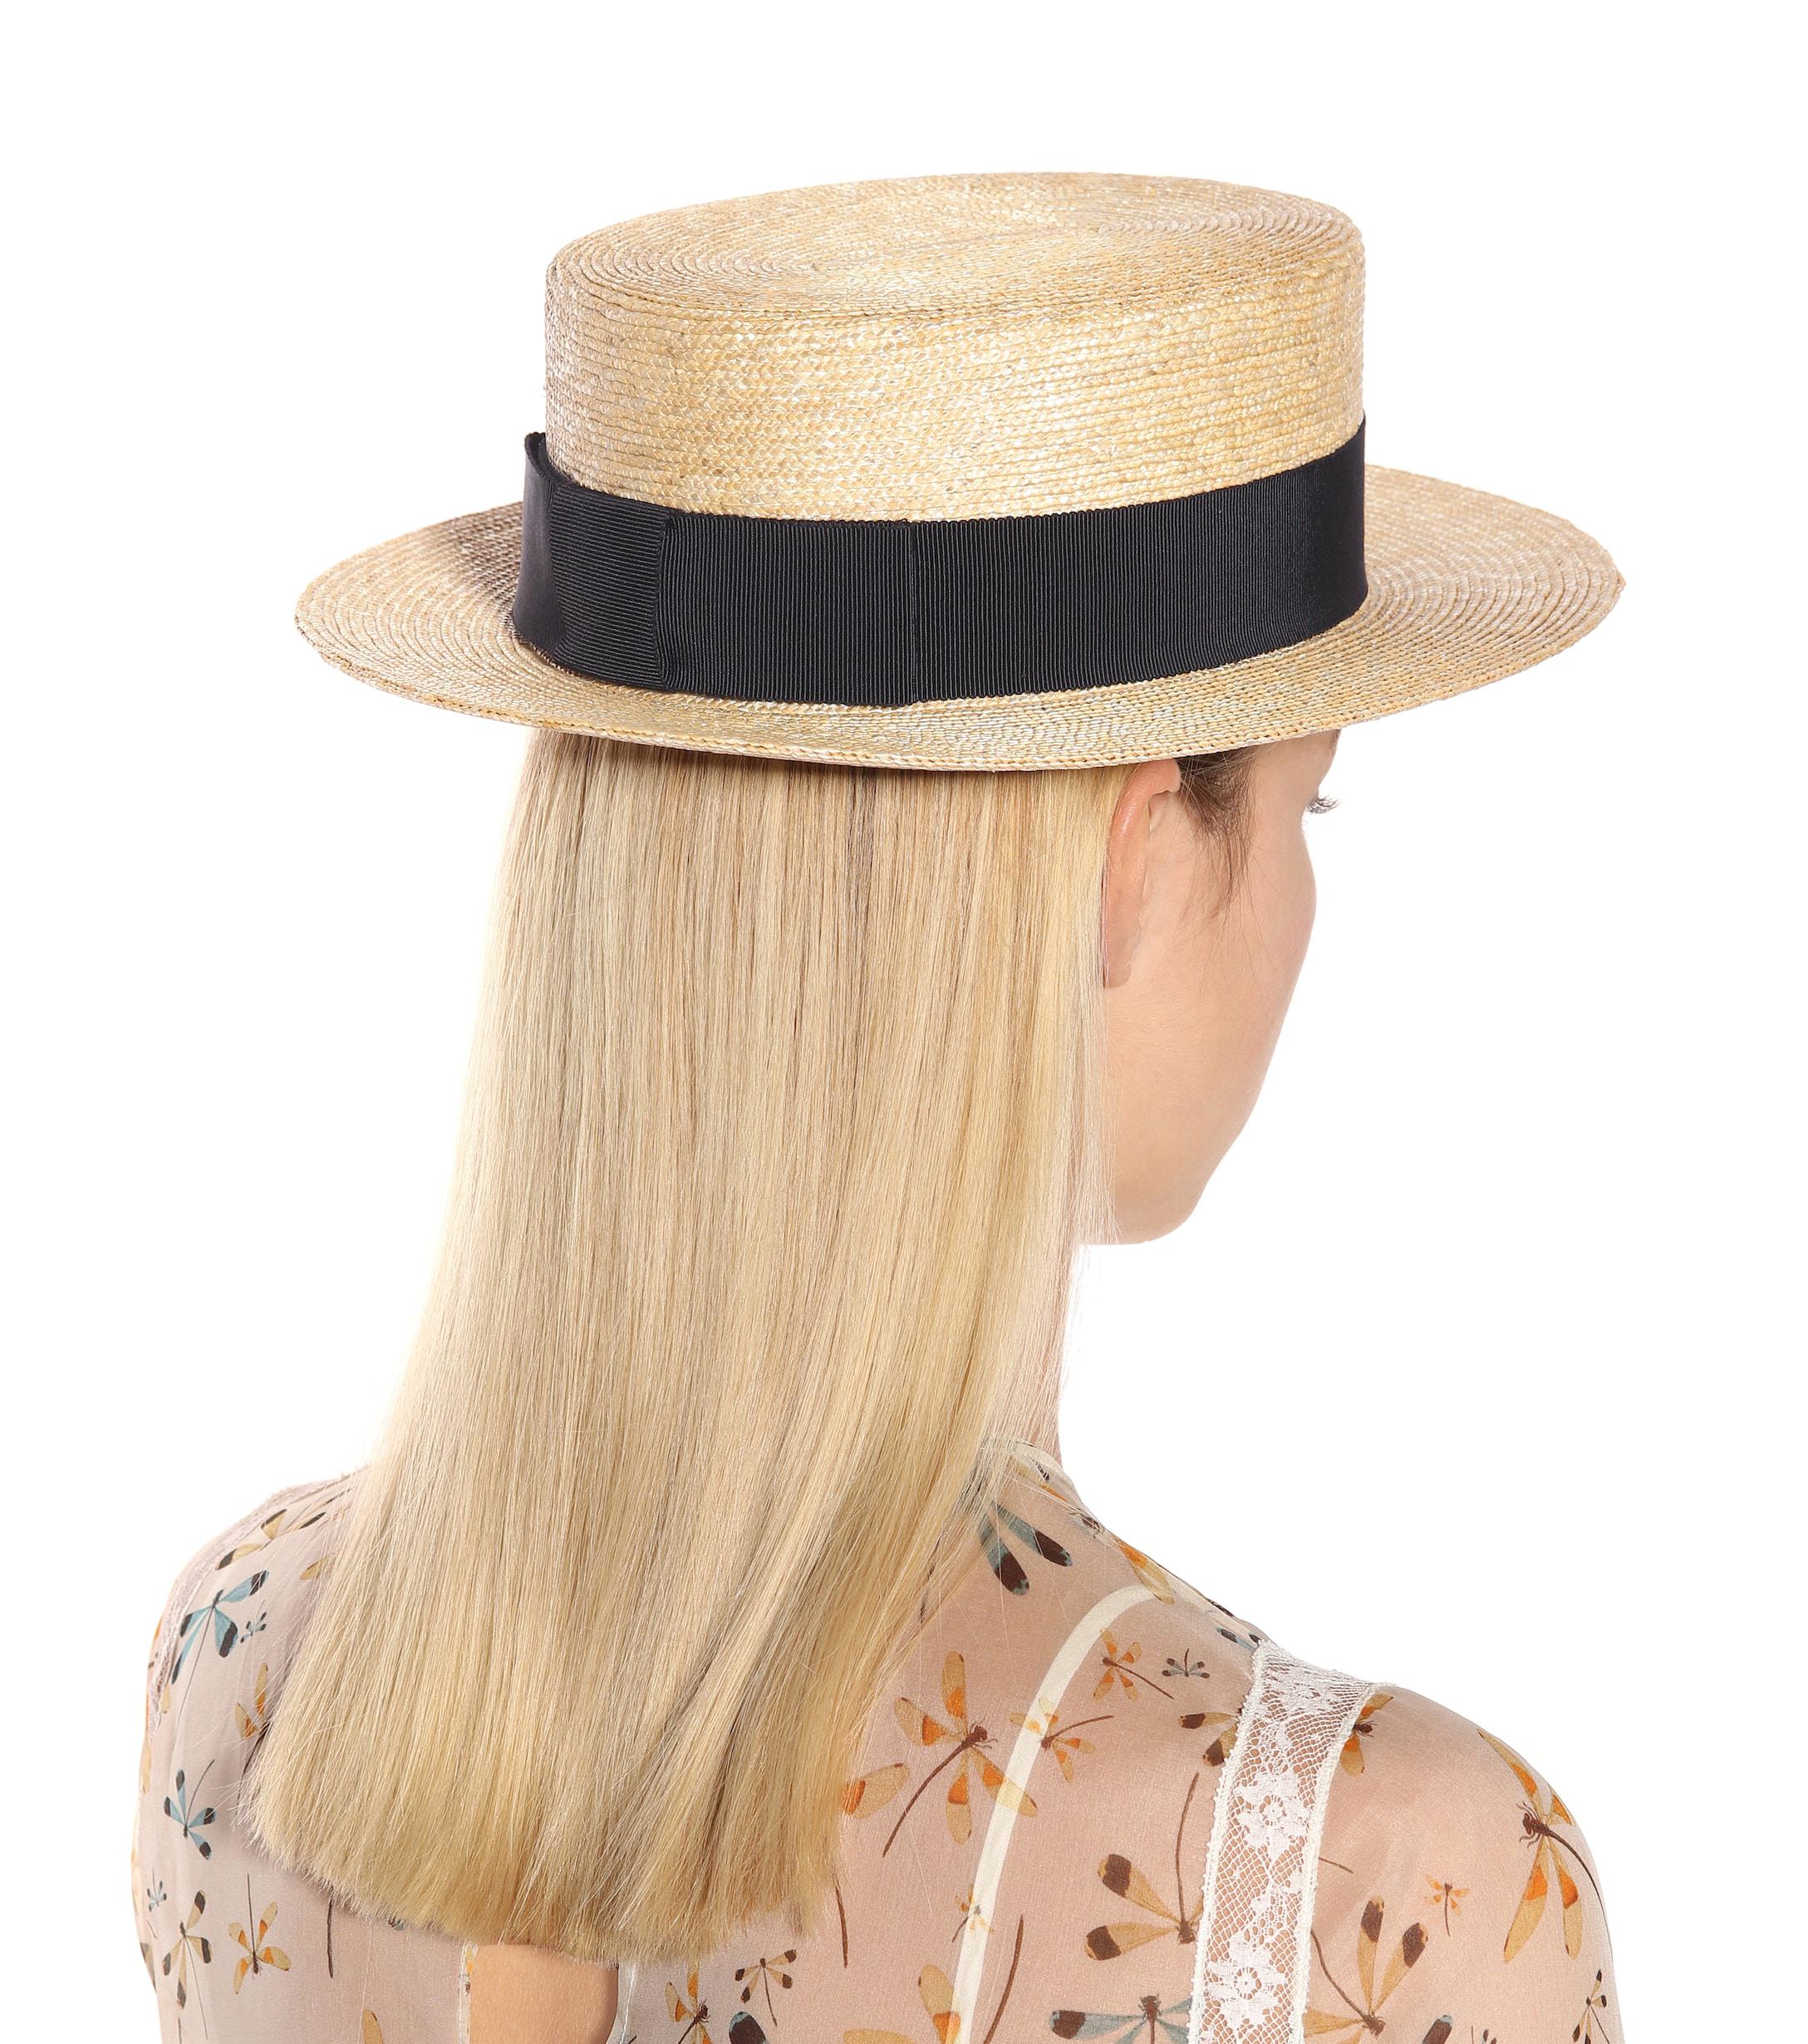 Prada Panama Hat Factory Sale, SAVE 37% 